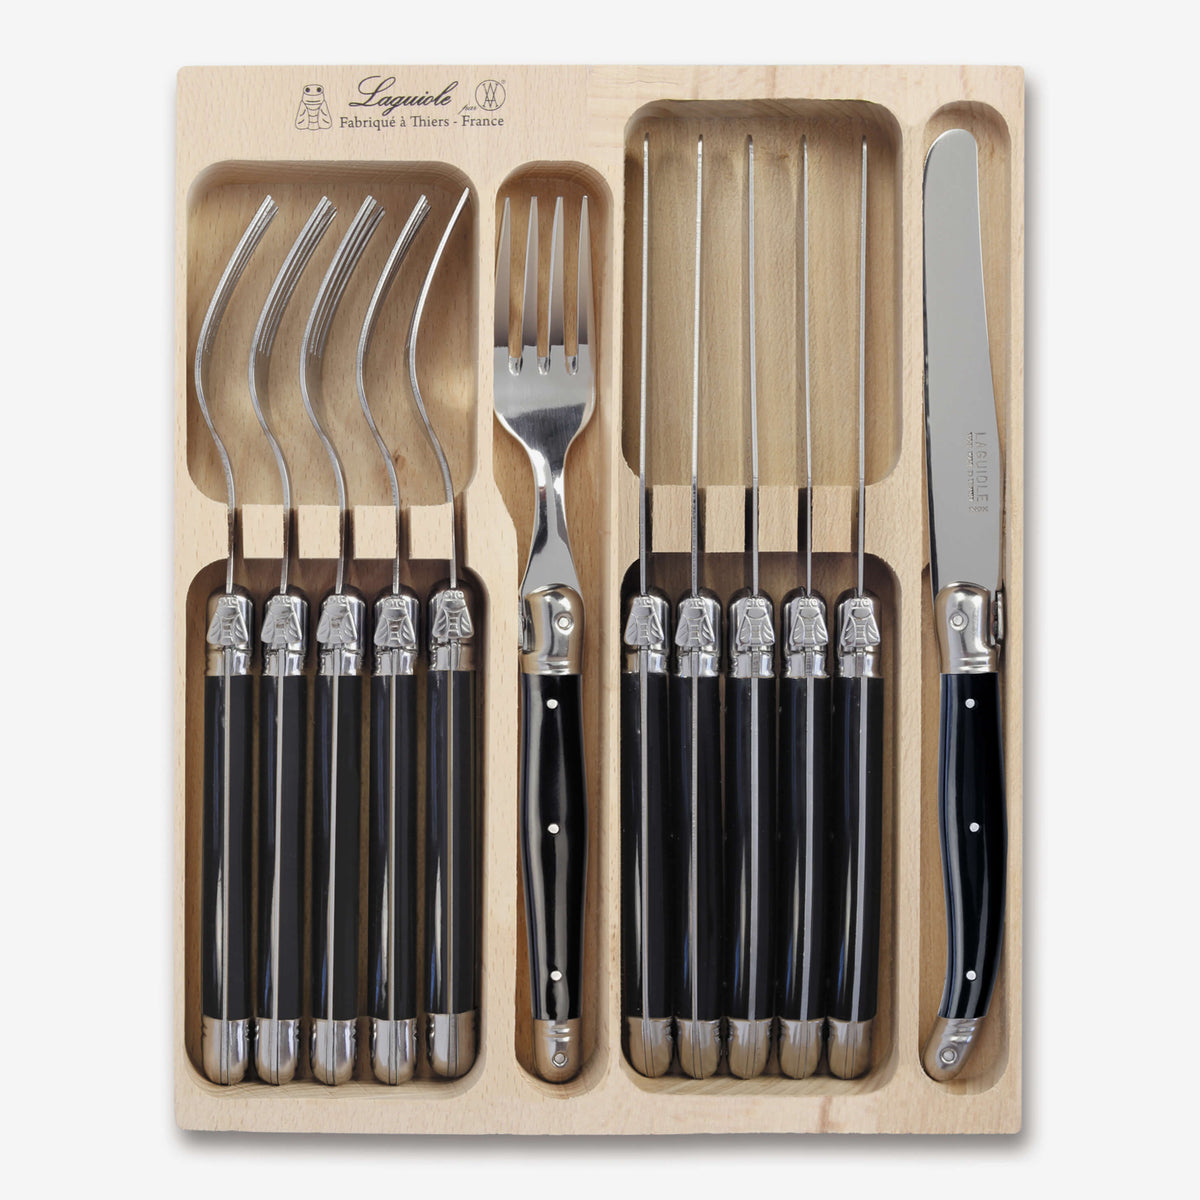 12 Piece Knife & Fork Set in Wooden Presentation Tray